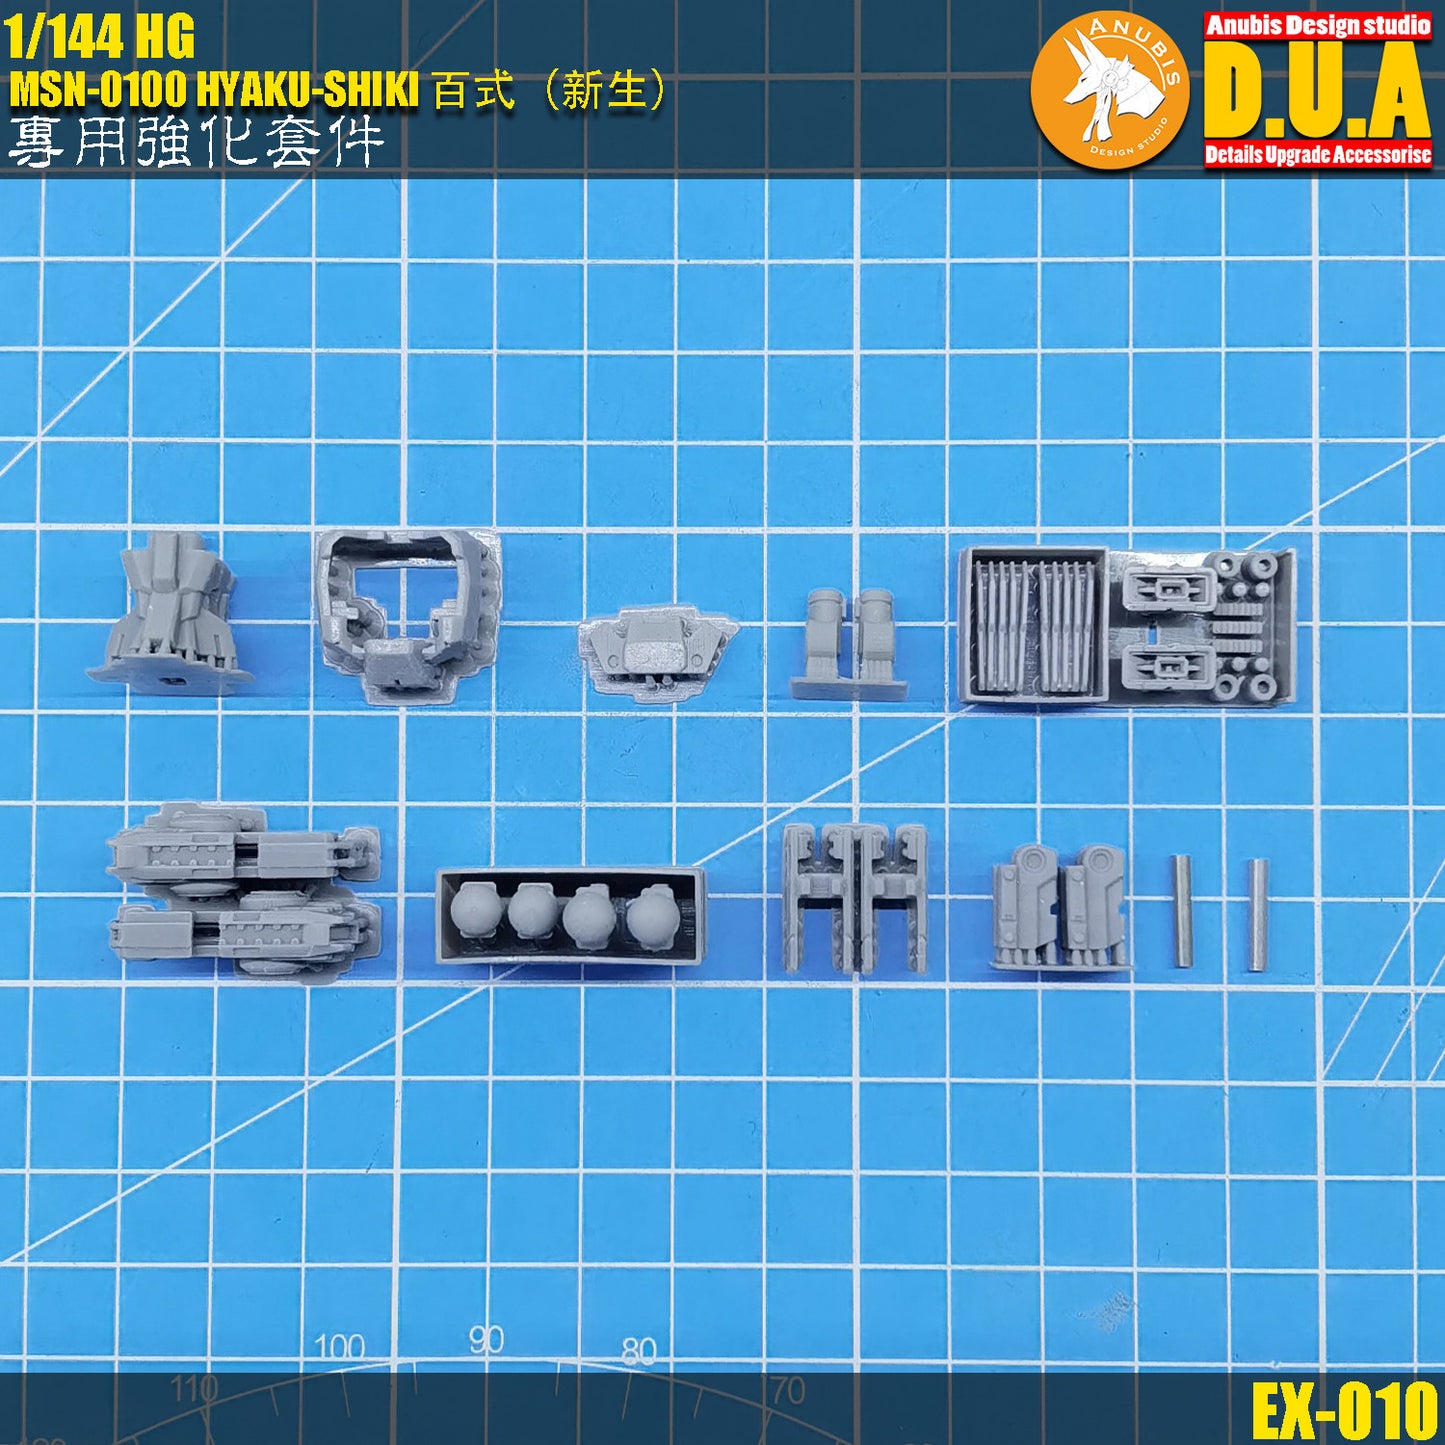 Anubis D.U.A EX-010 Armament system for HG Hyukushiki